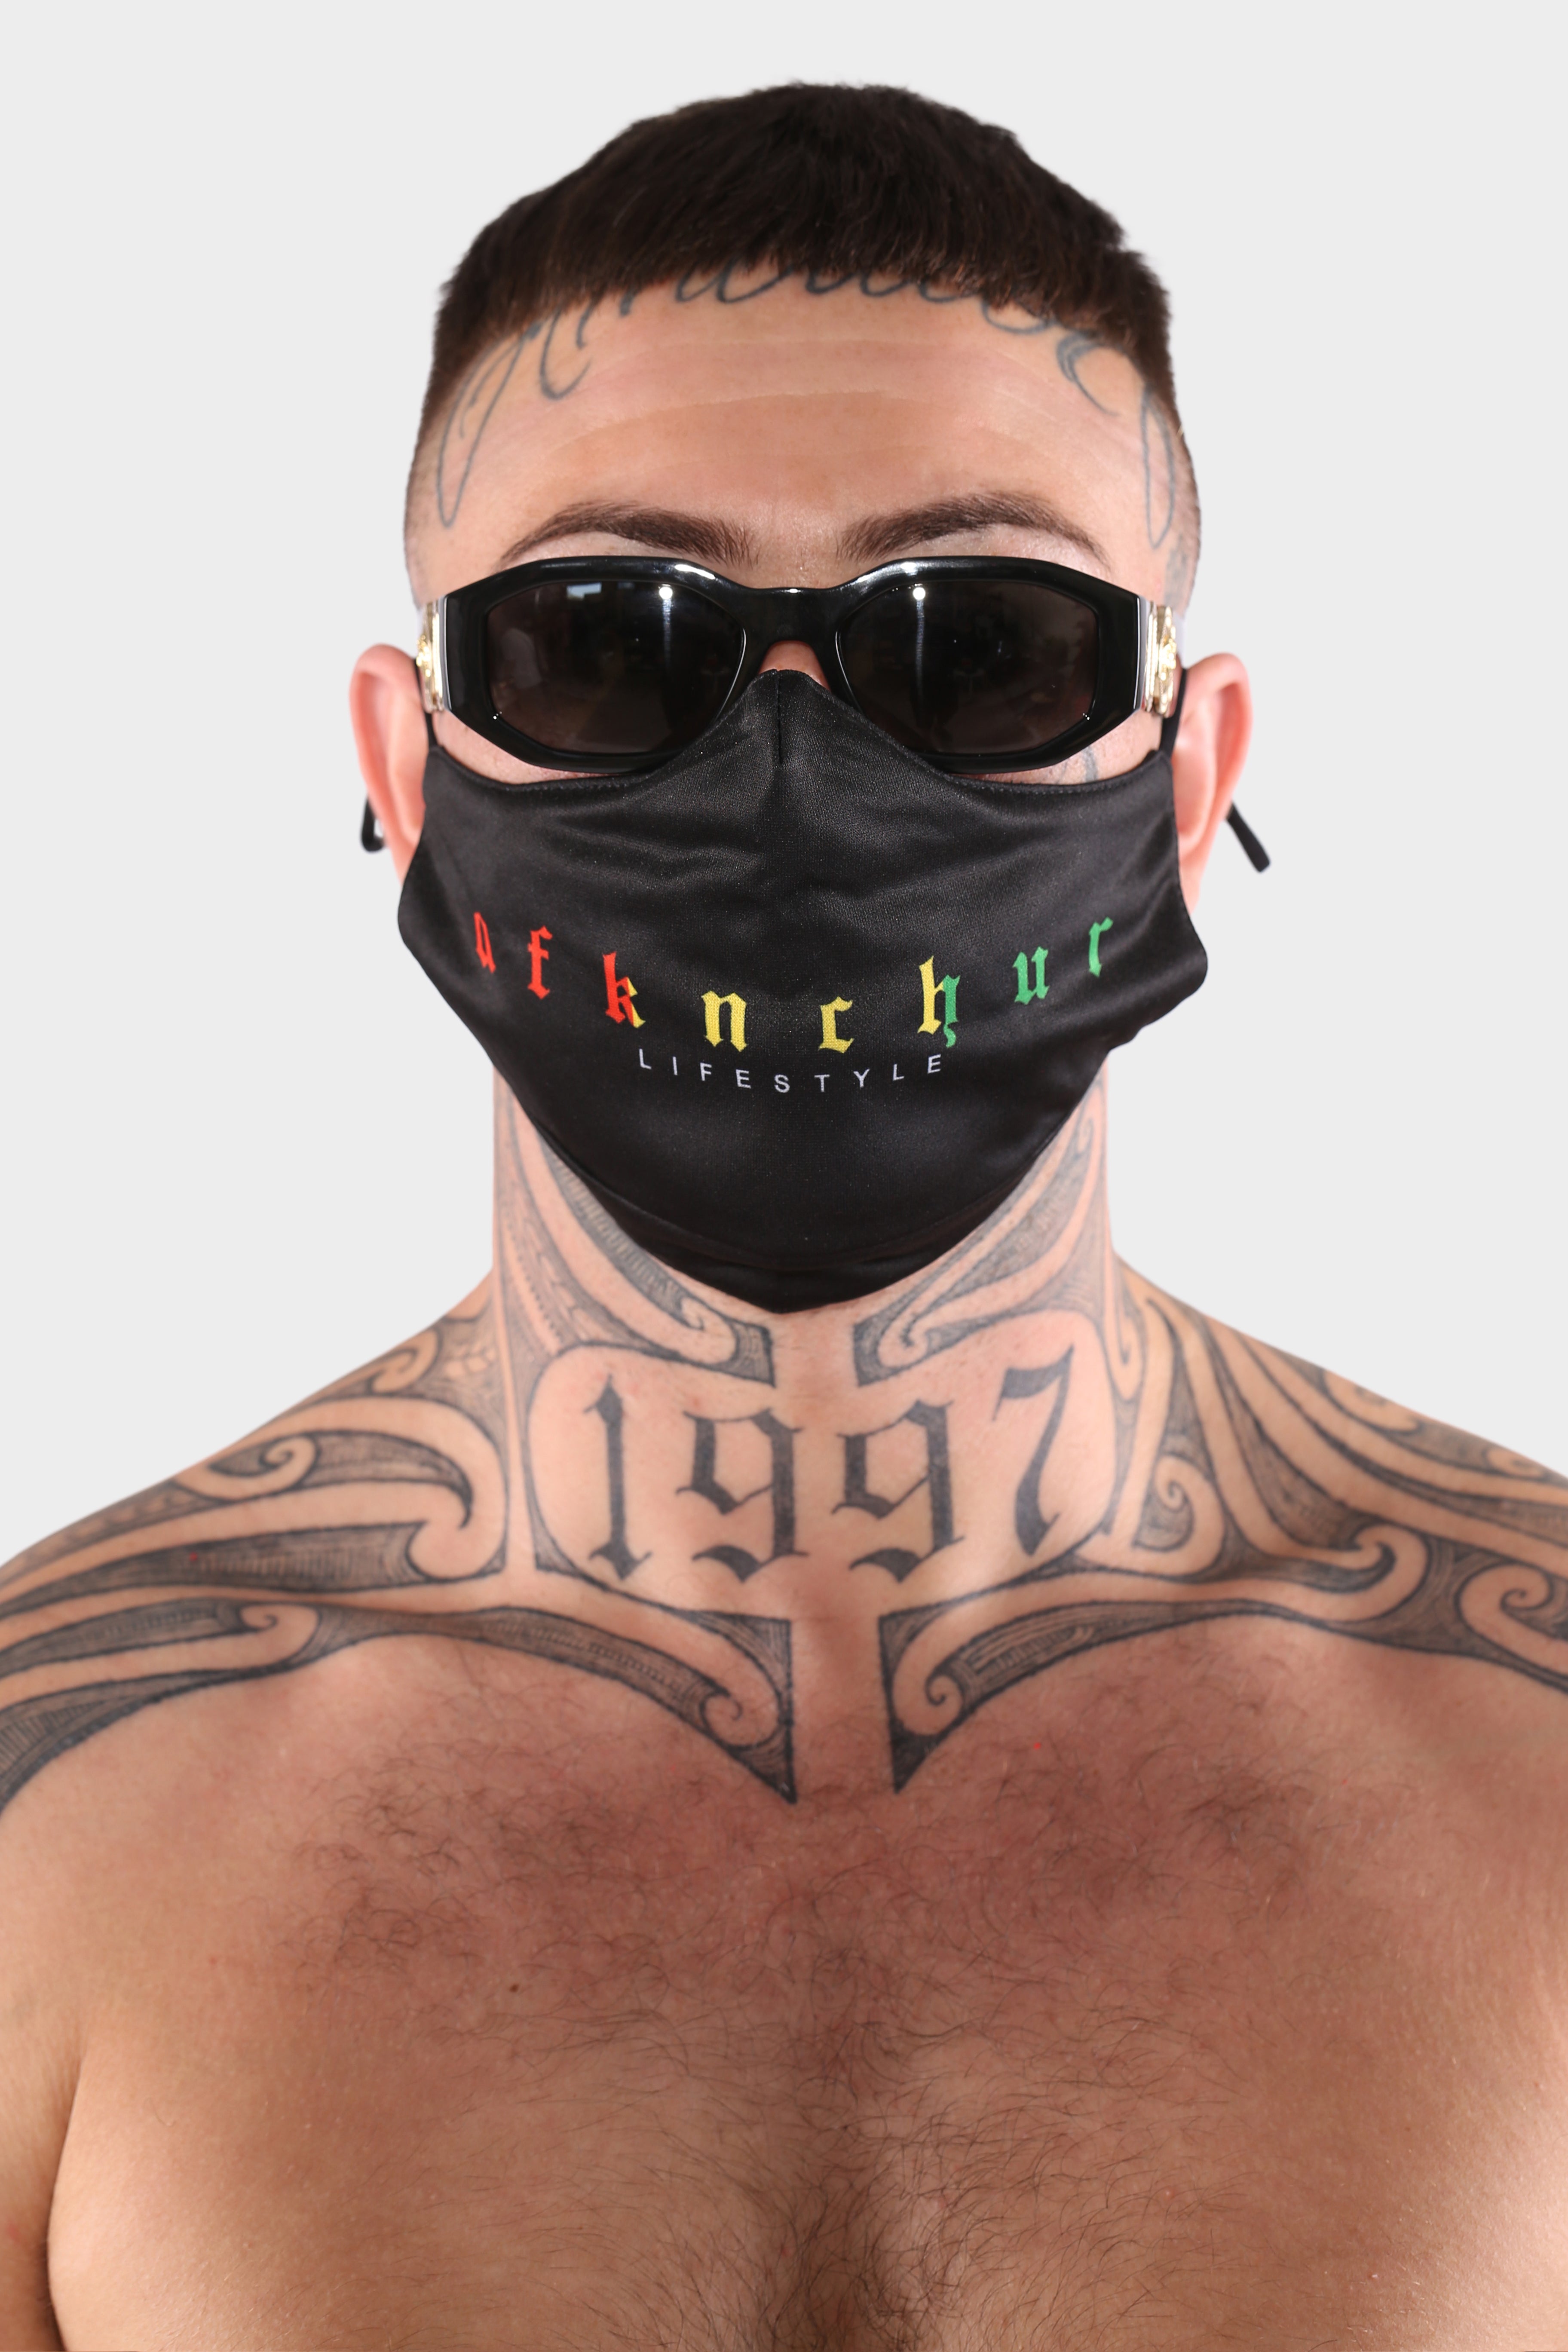 AFKNCHUR Lifestyle Mask Black/Rasta